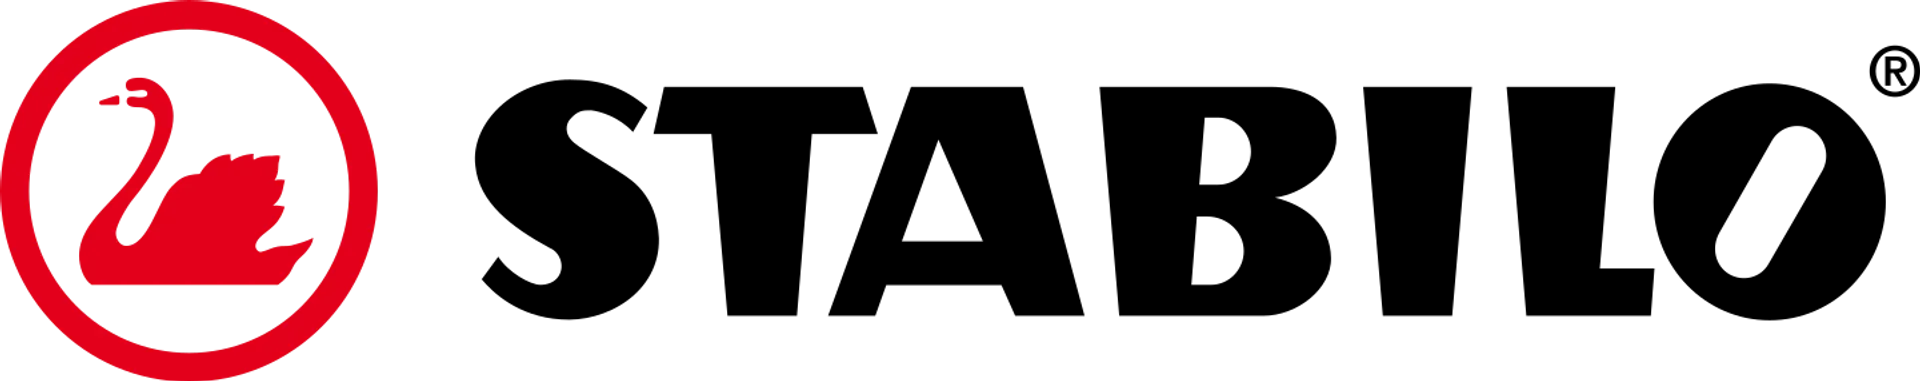 STABILO logo die aktuell Flugblatt